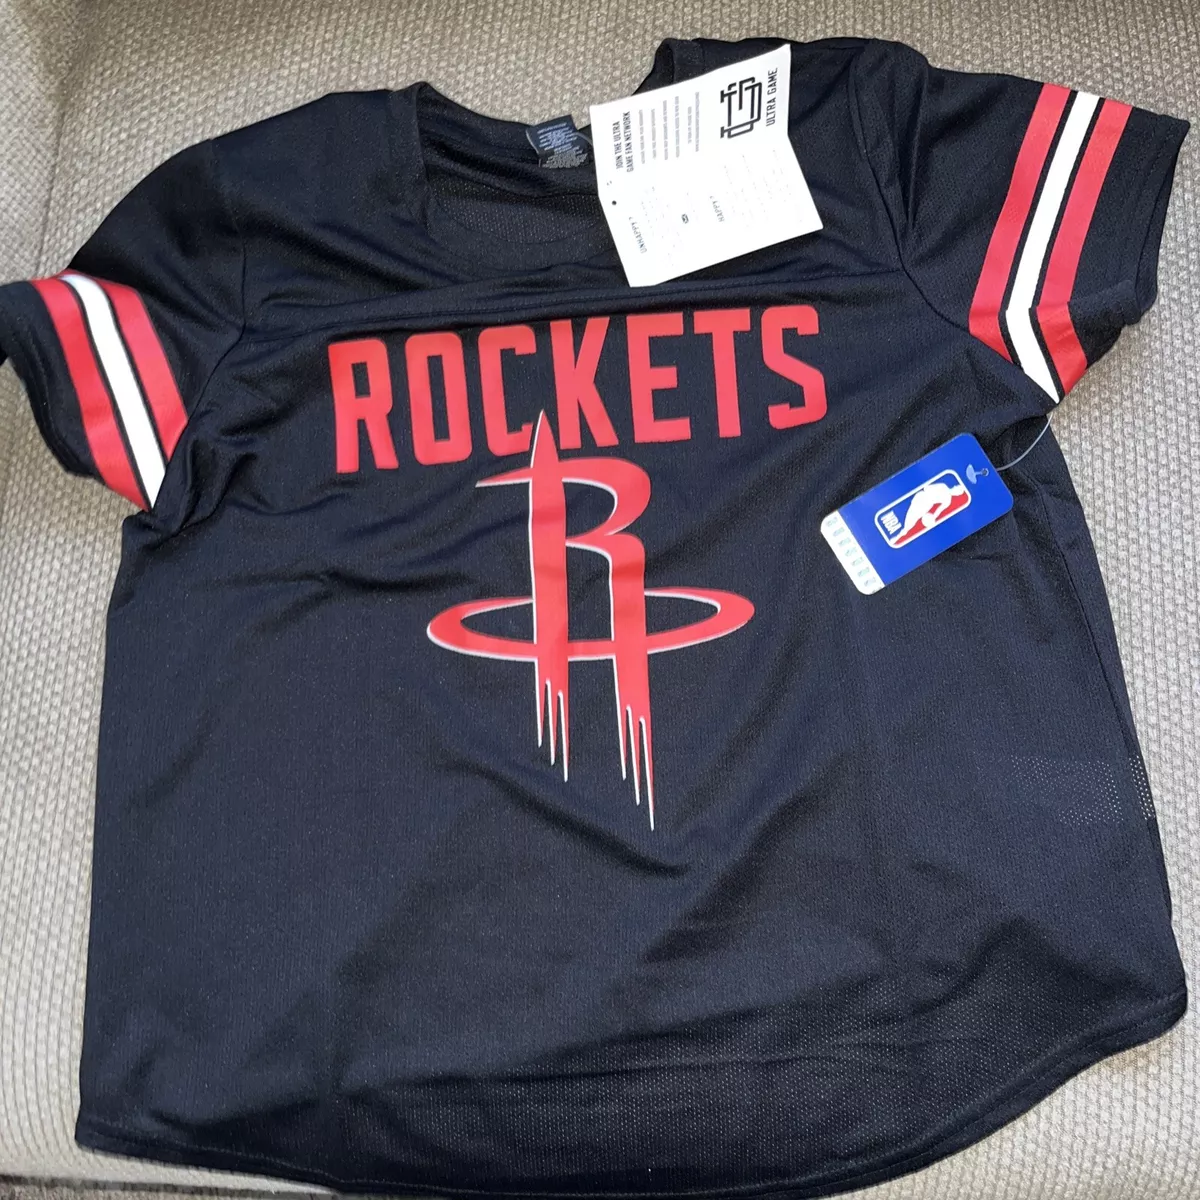 black houston rockets shirt